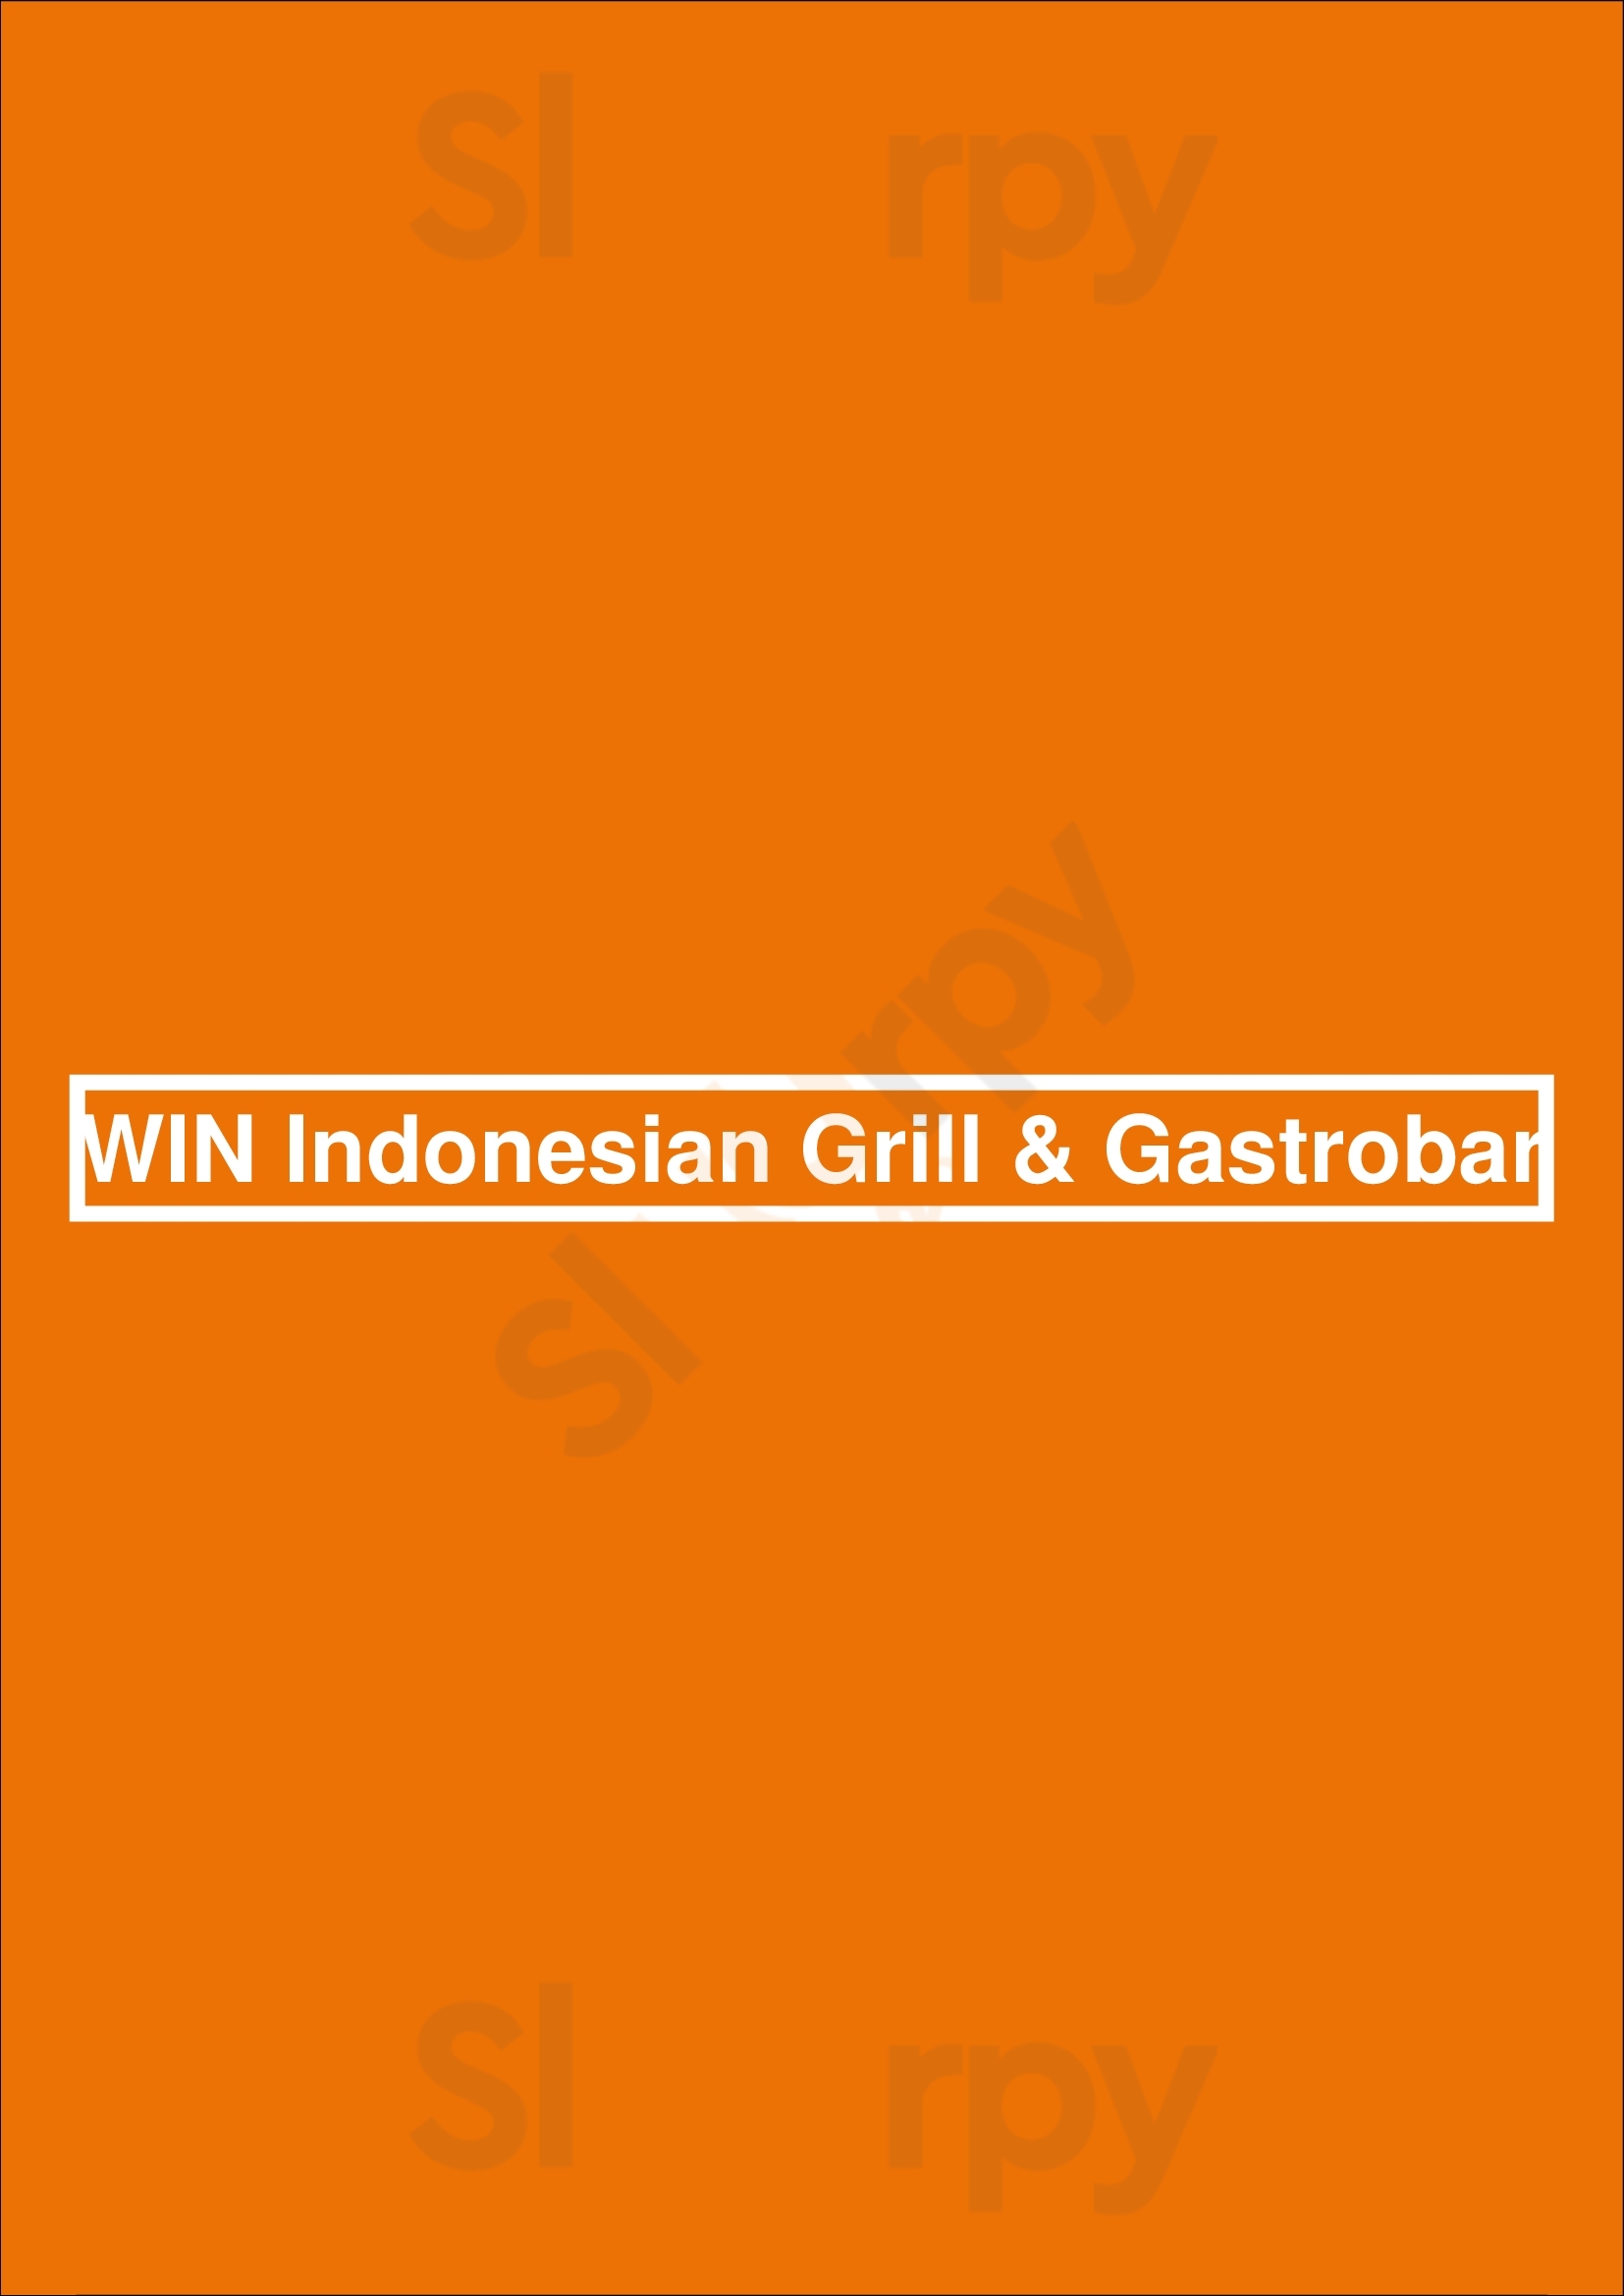 Win - Taste Of Bali Atlanta Menu - 1